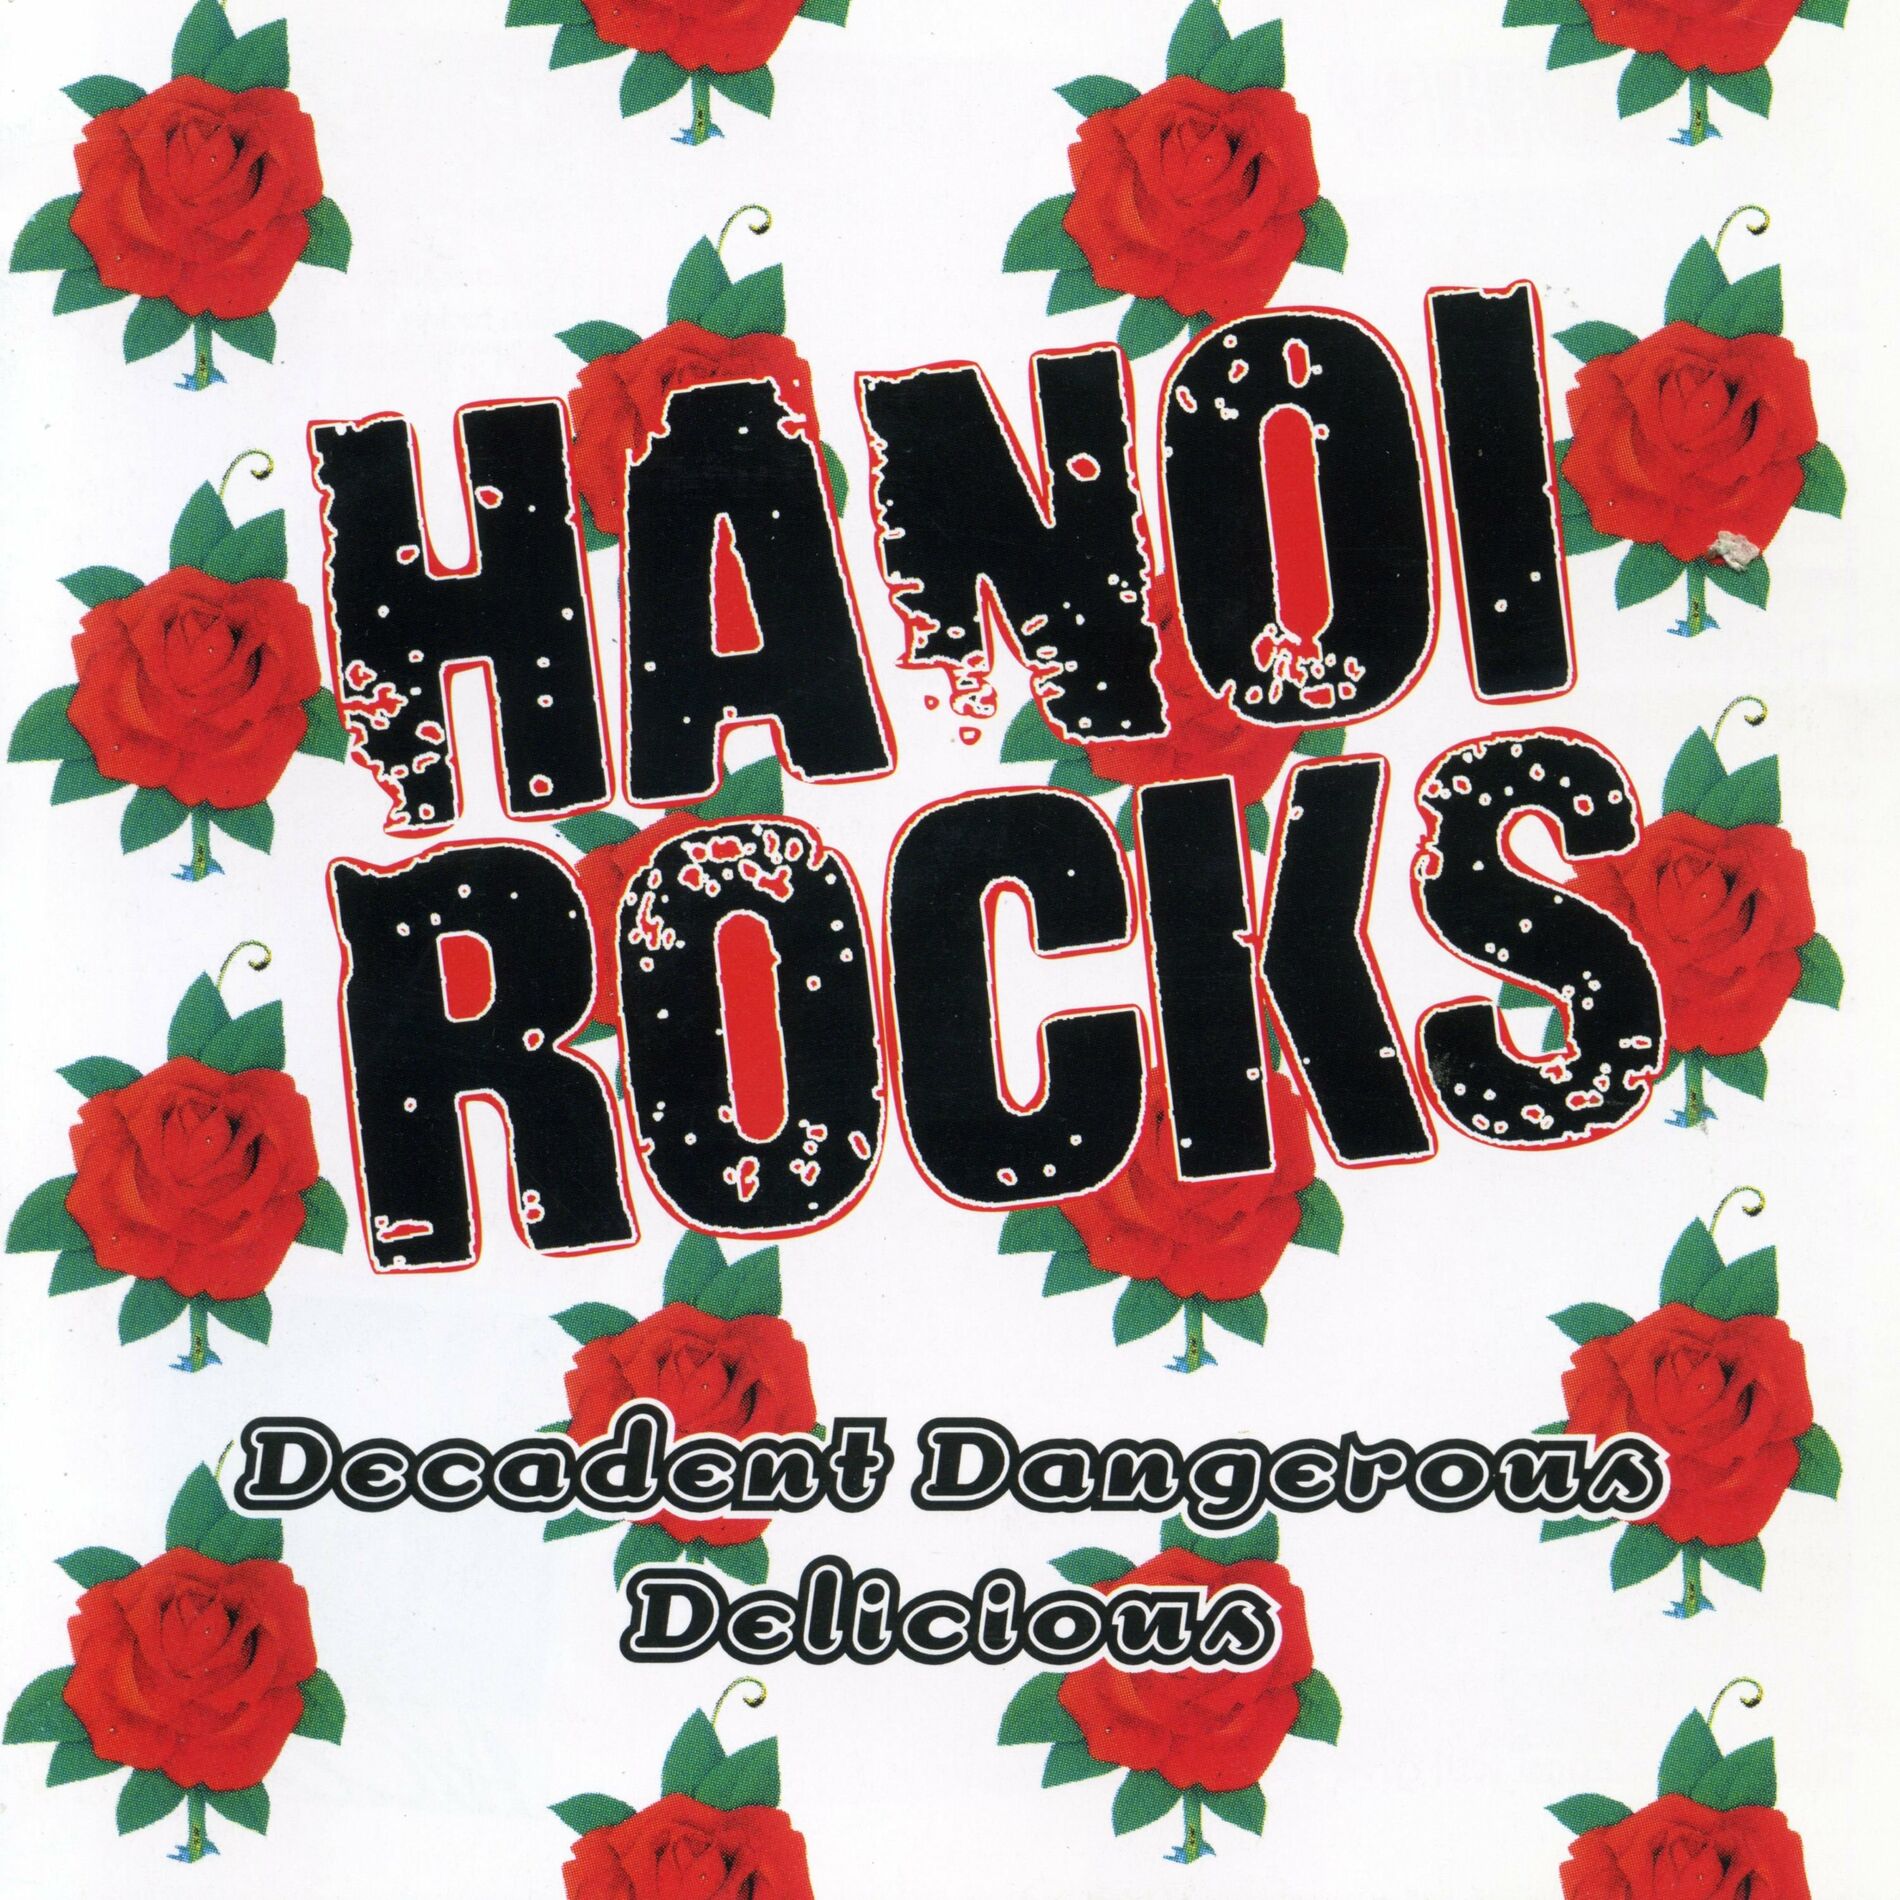 Hanoi Rocks: albums, songs, playlists | Listen on Deezer